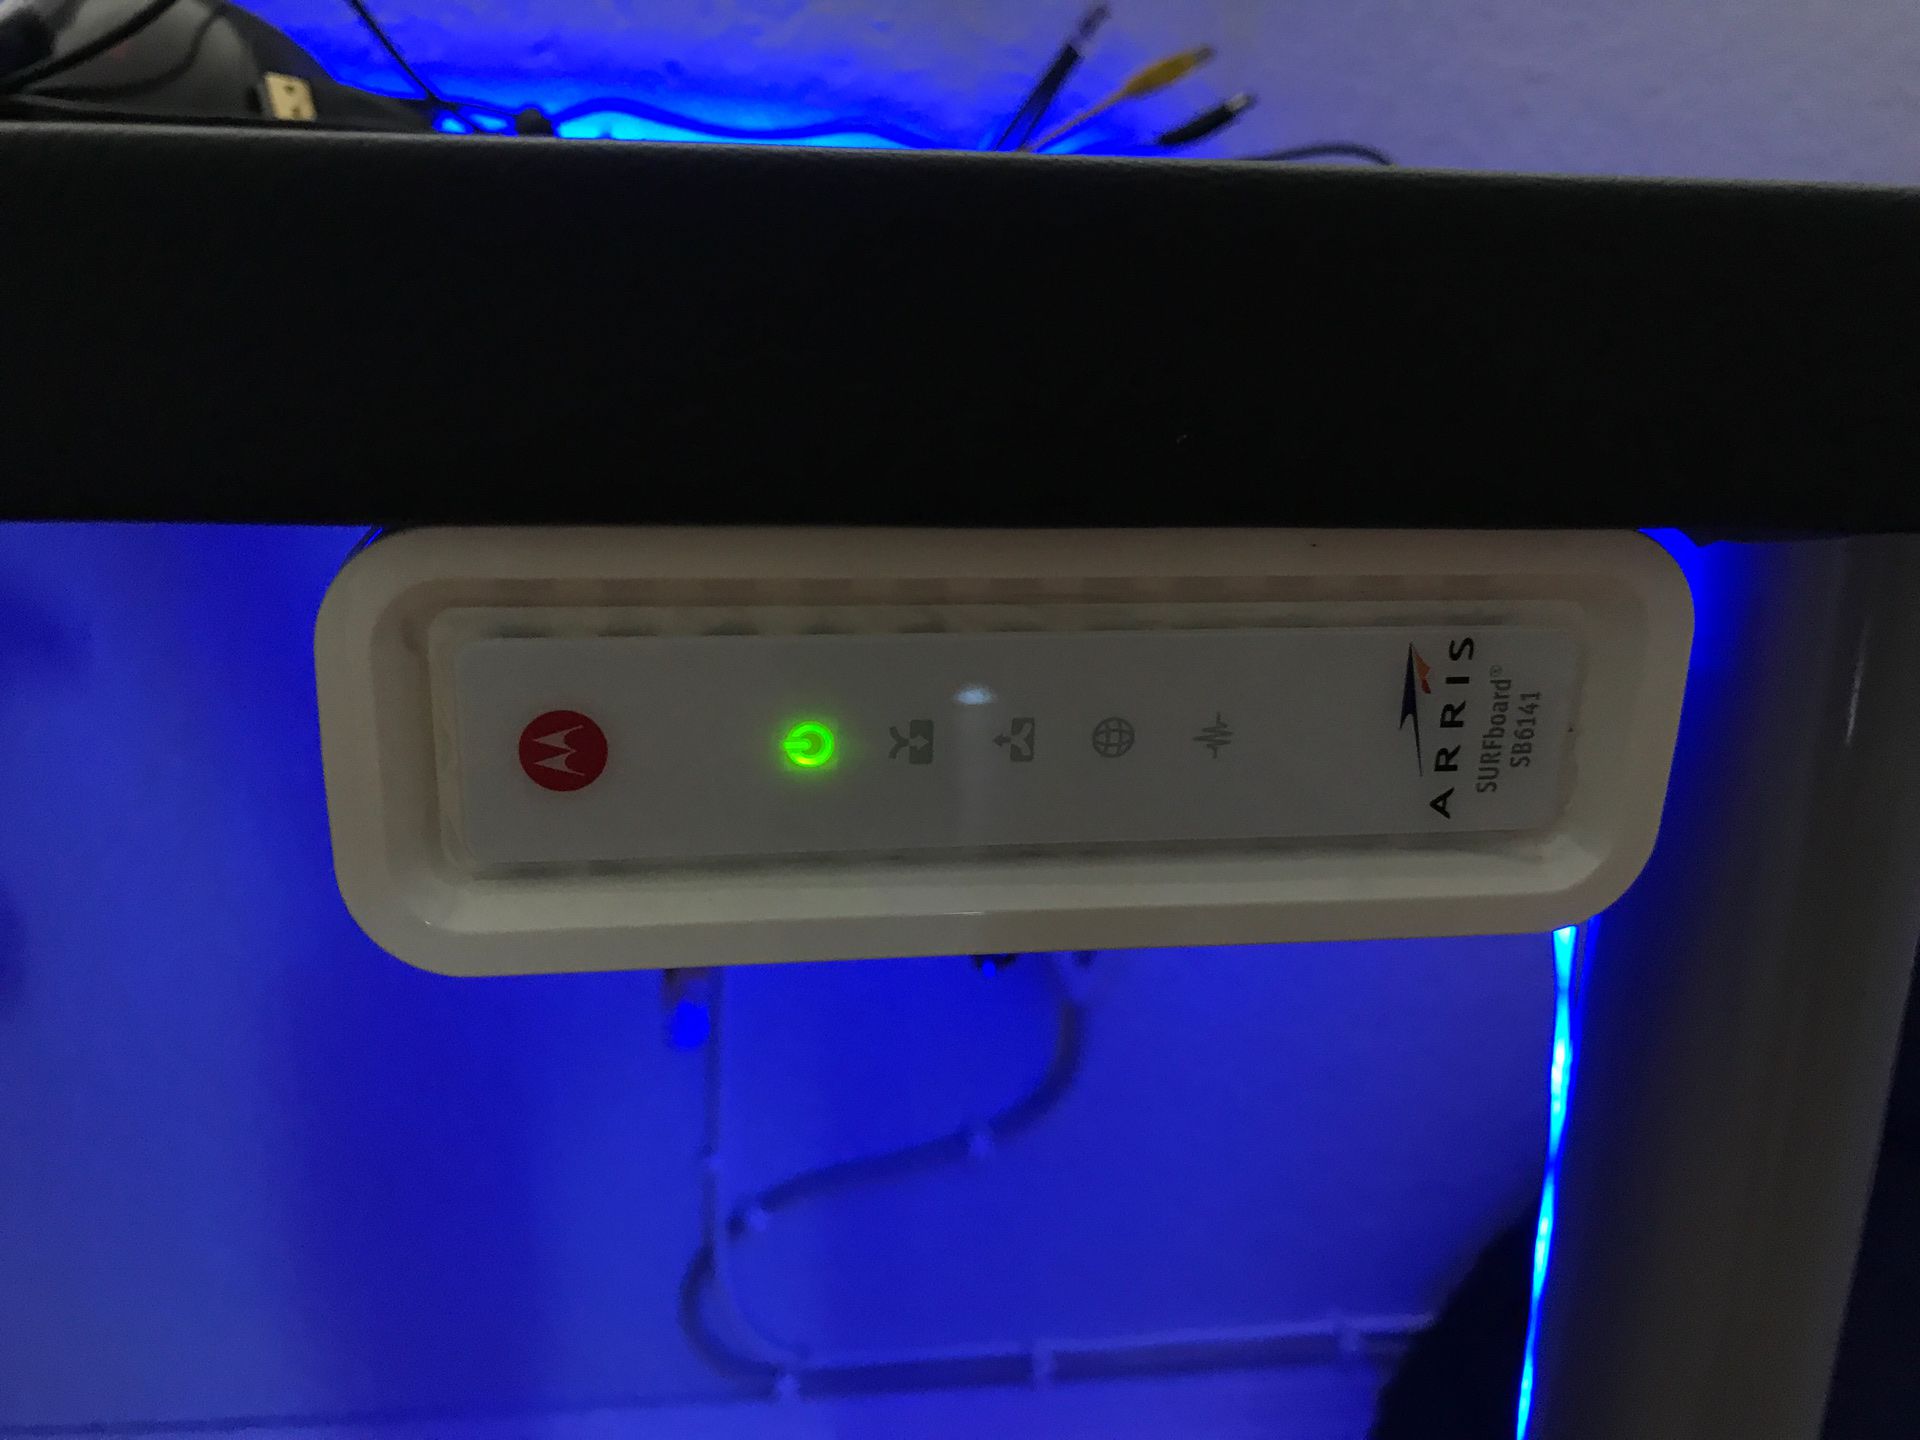 ARRIS SURFboard SB6141 internet modem Comcast Xfinity ready